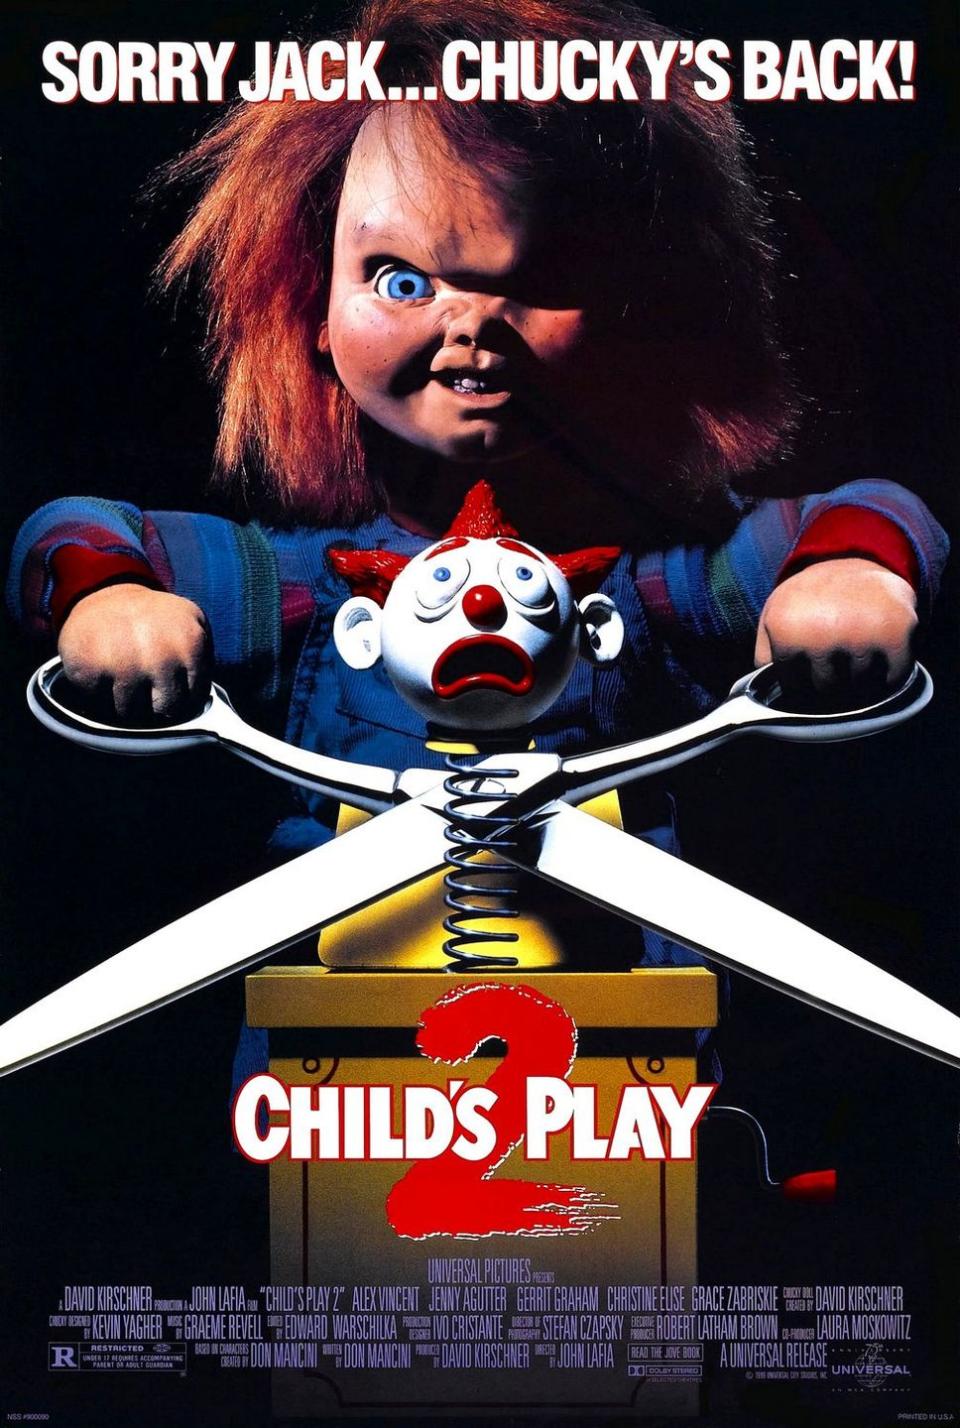 2) Child’s Play 2 (1990)